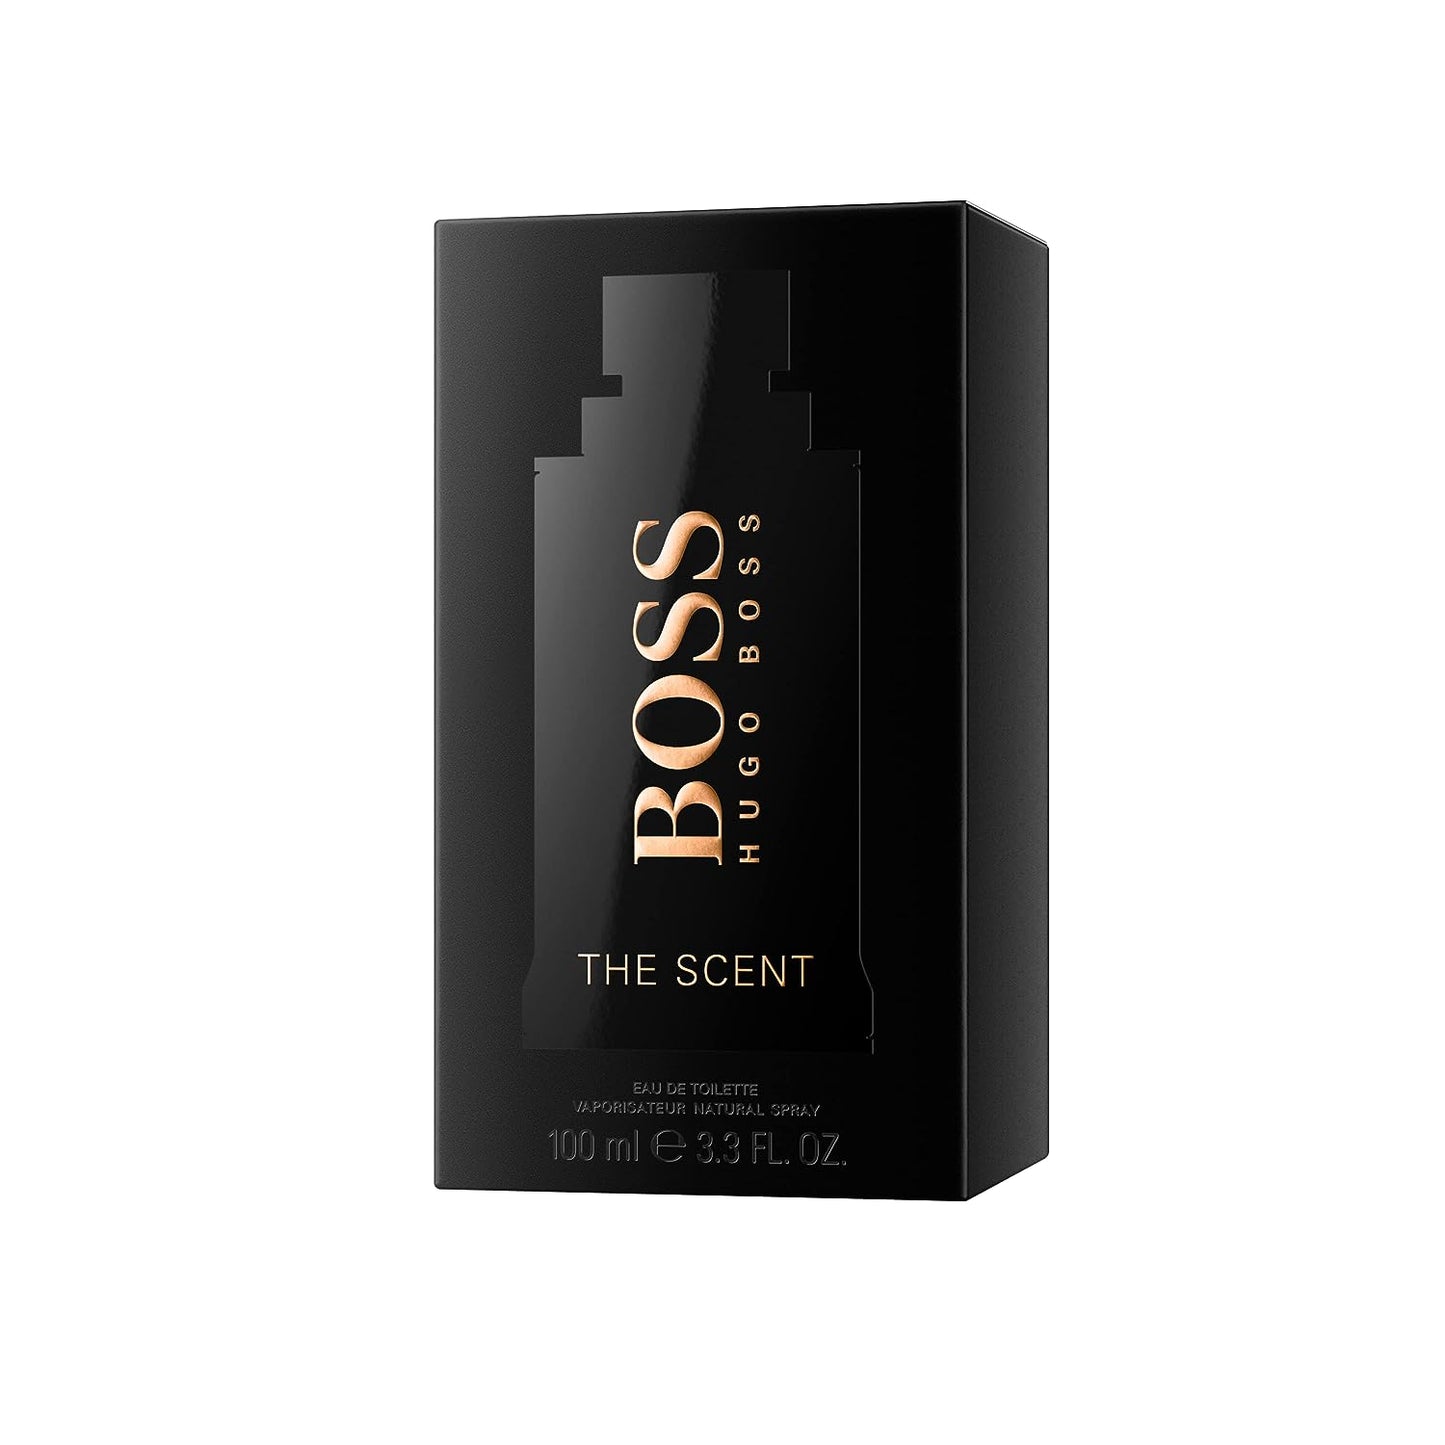 Hugo Boss The Scent Eau de Toilette for Men - Notes of Ginger, Maninka Fruit and Leather